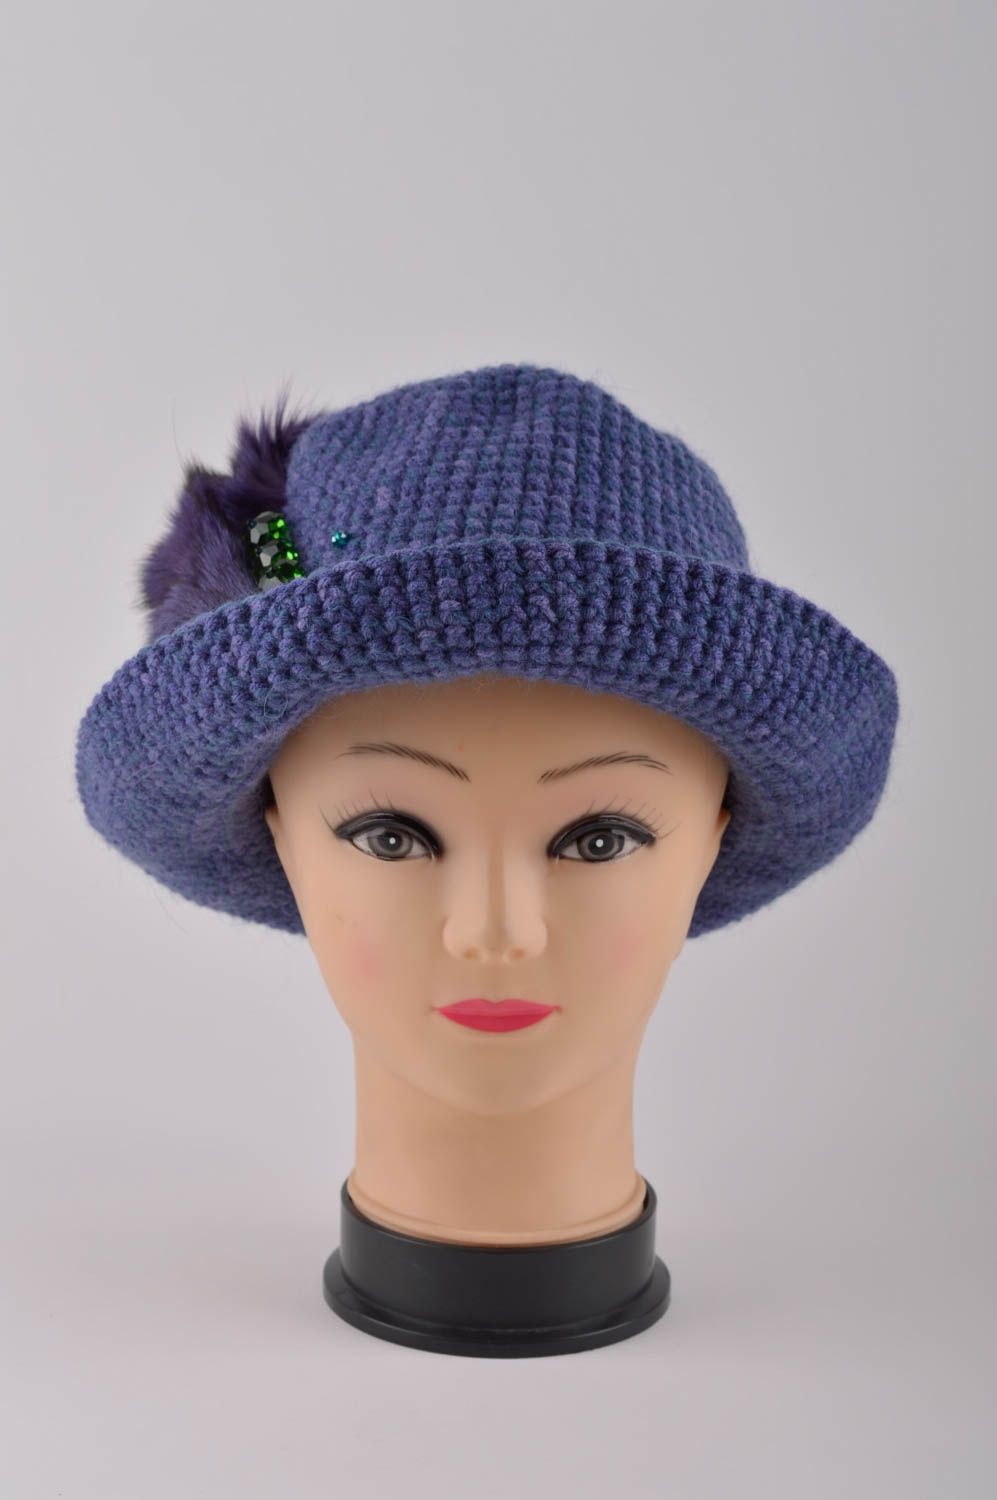 Handmade designer hat ladies hat crochet hat fashion accessories gifts for women photo 3